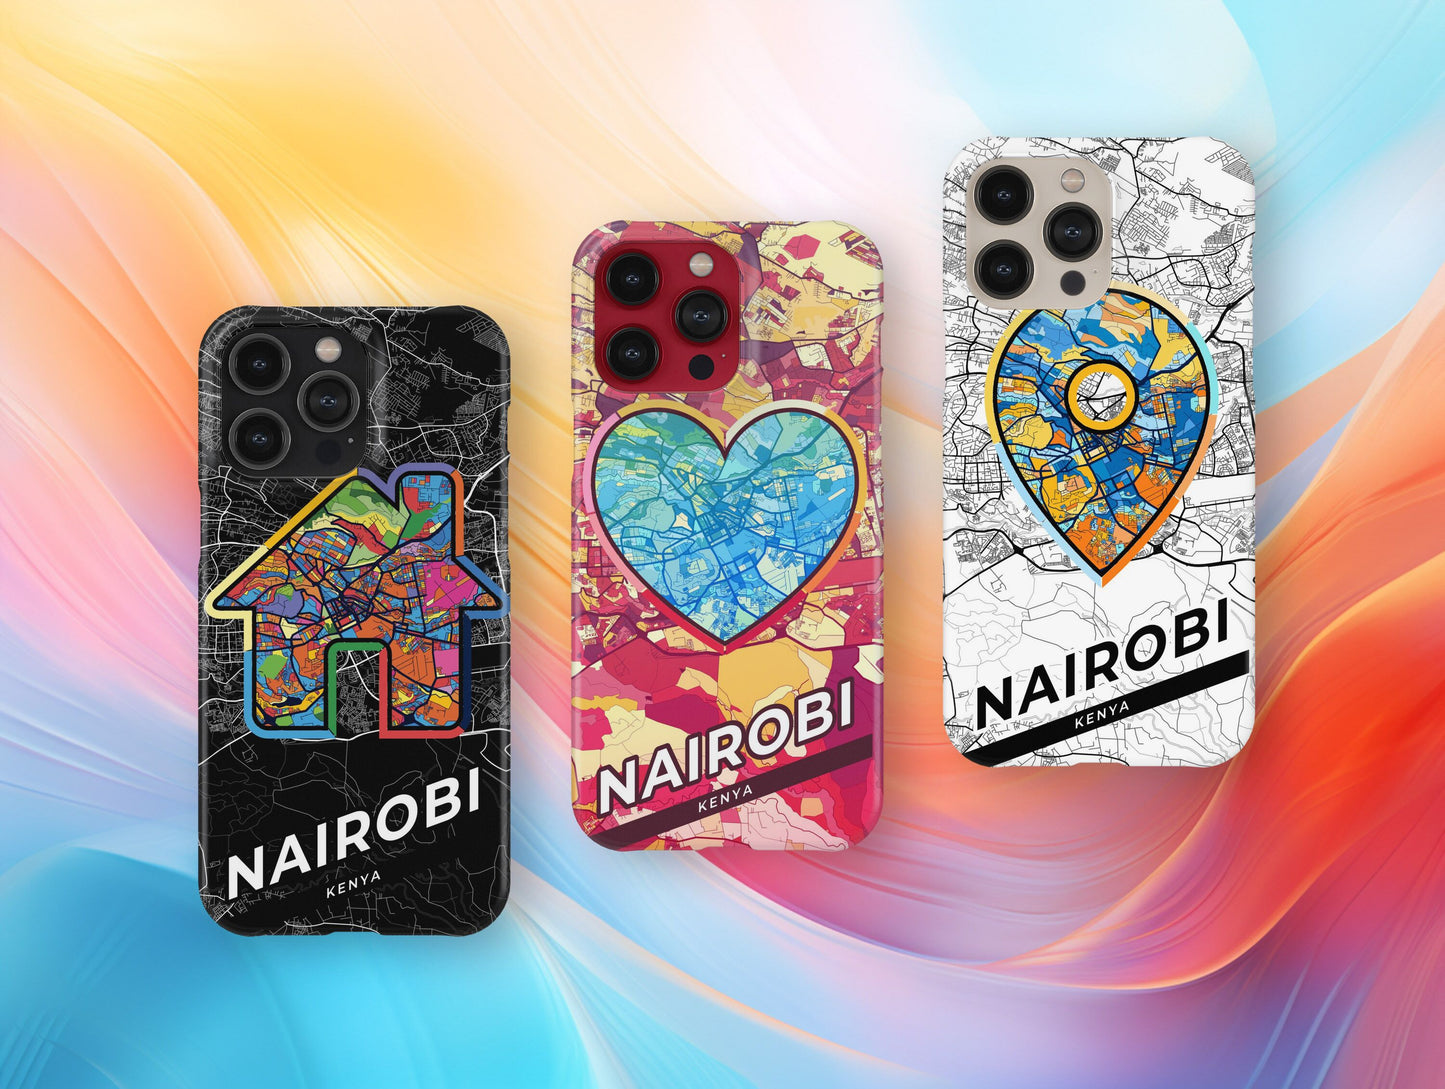 Nairobi Kenya slim phone case with colorful icon